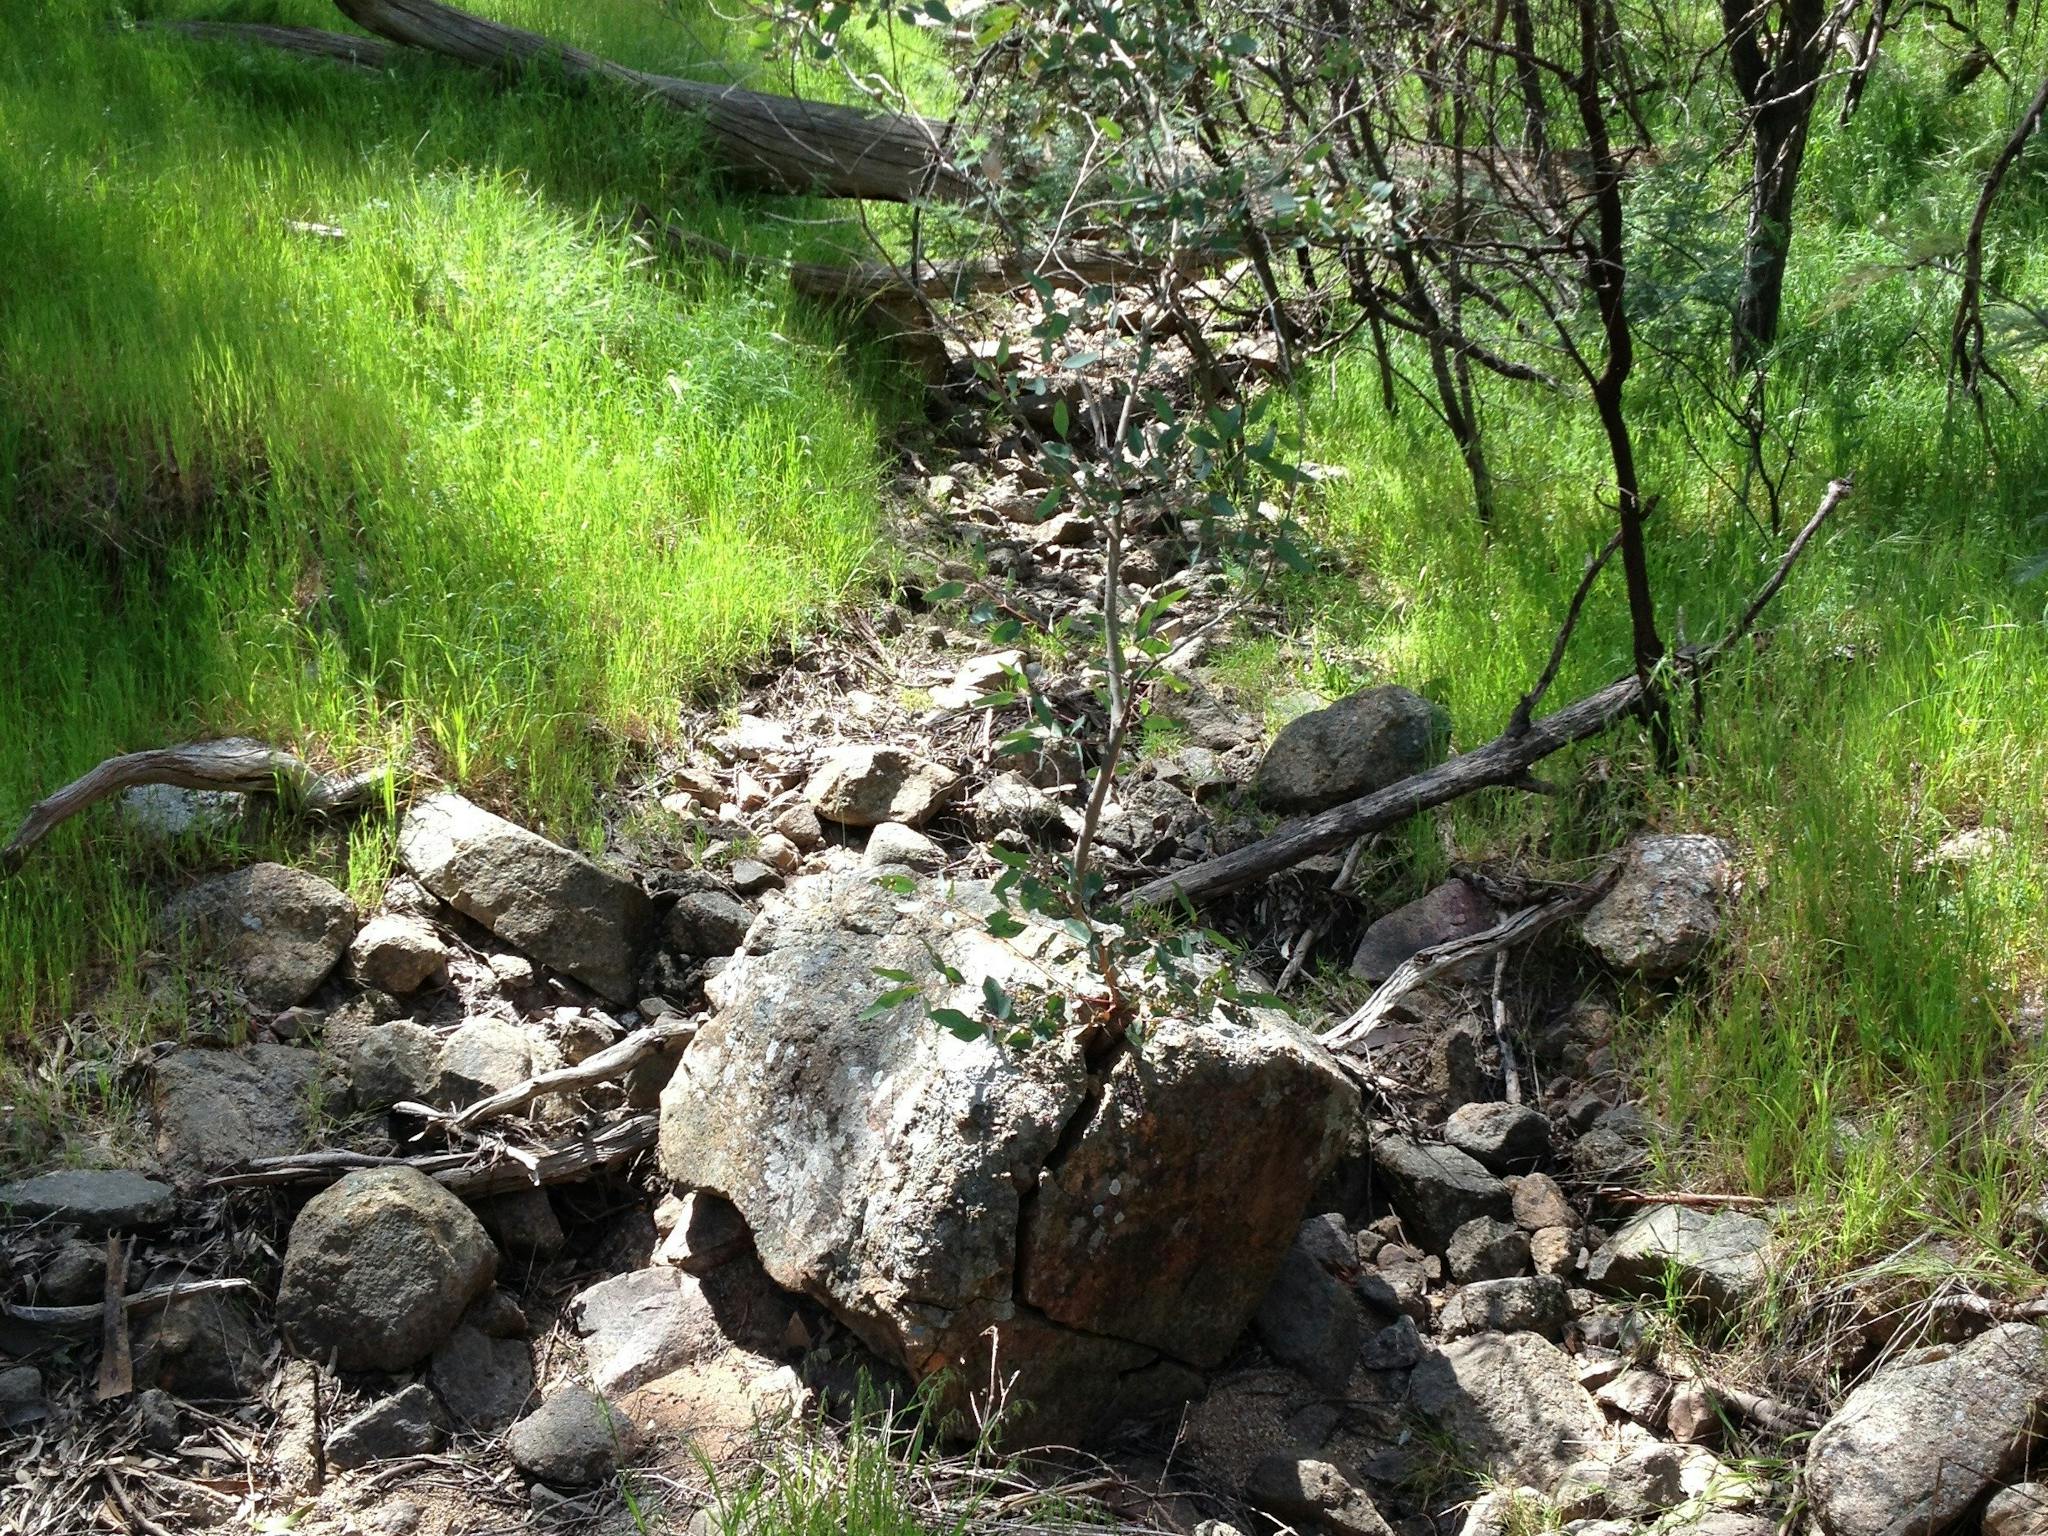 large rocks, small rocks, dry creek bed, sticks, green native grasses